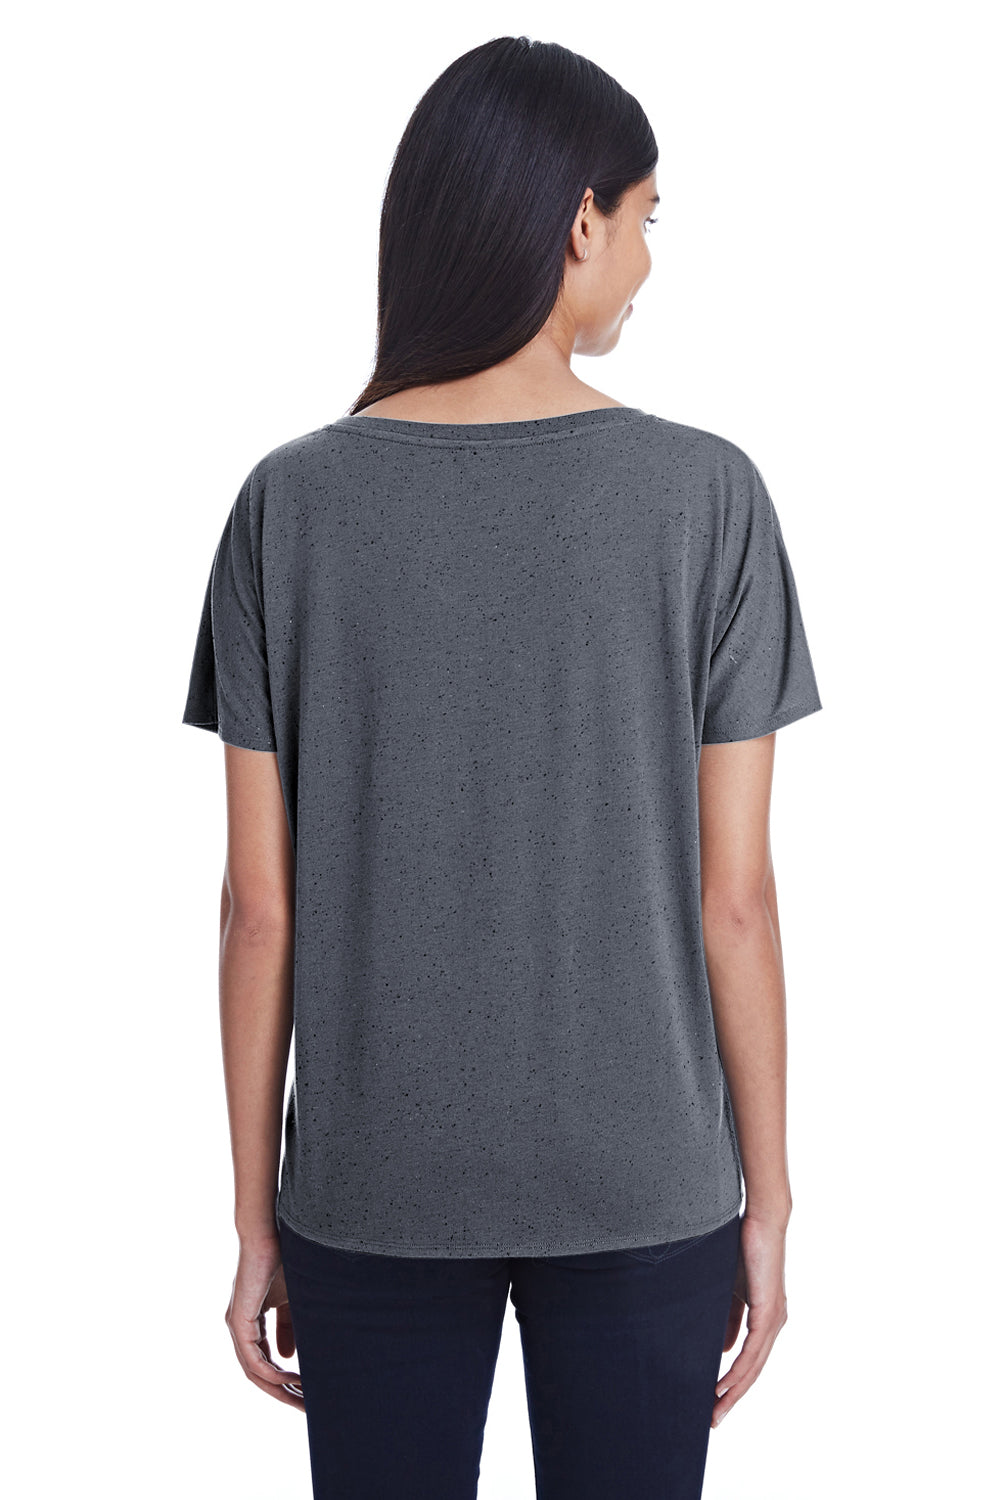 Threadfast Apparel 203FV Womens Fleck Short Sleeve V-Neck T-Shirt Charcoal Grey Back